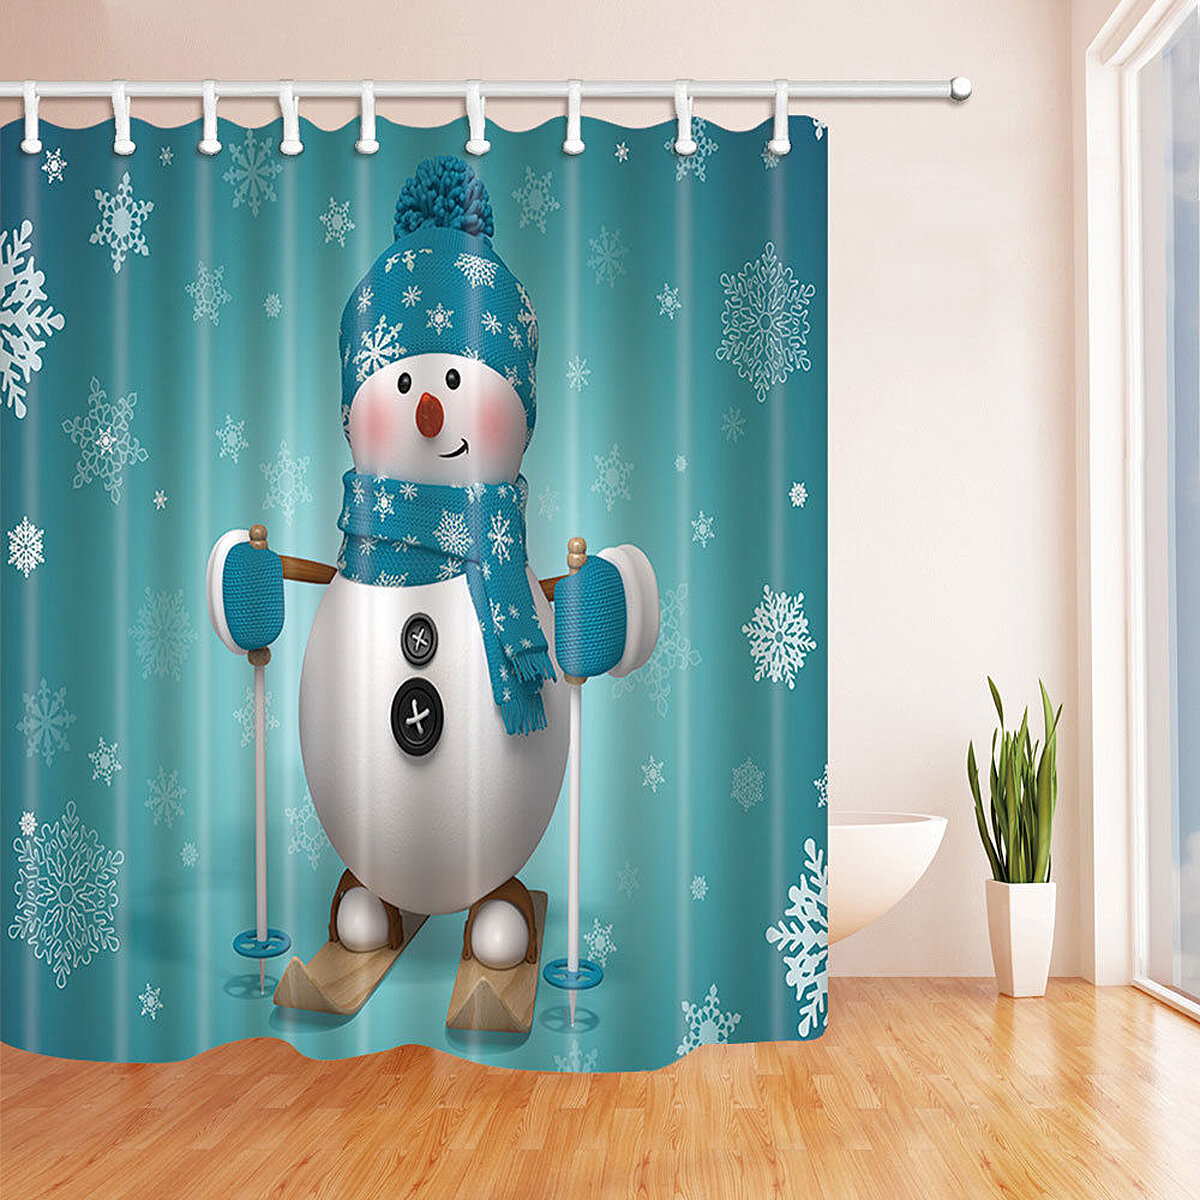 180x180cm Skiing Snowman Christmas Waterproof Bath Shower Curtains With 12 Hooks